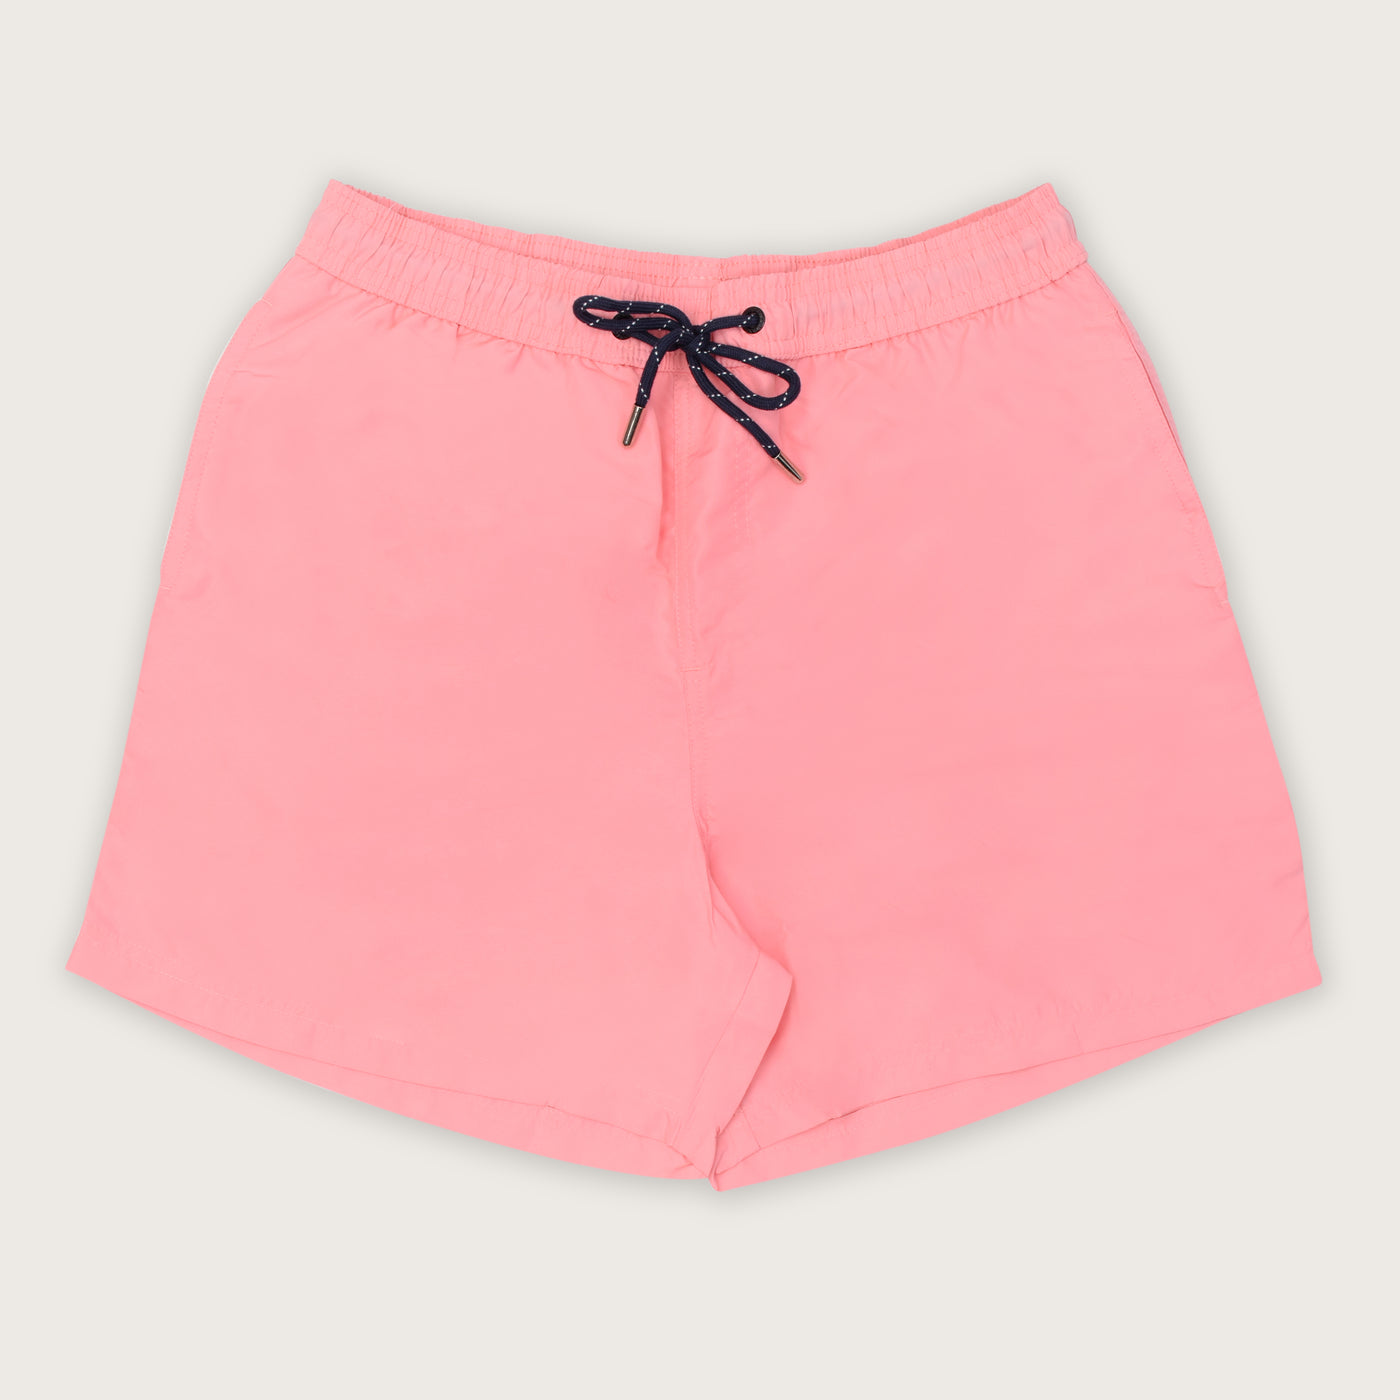 Buy now plain elastic swim shorts